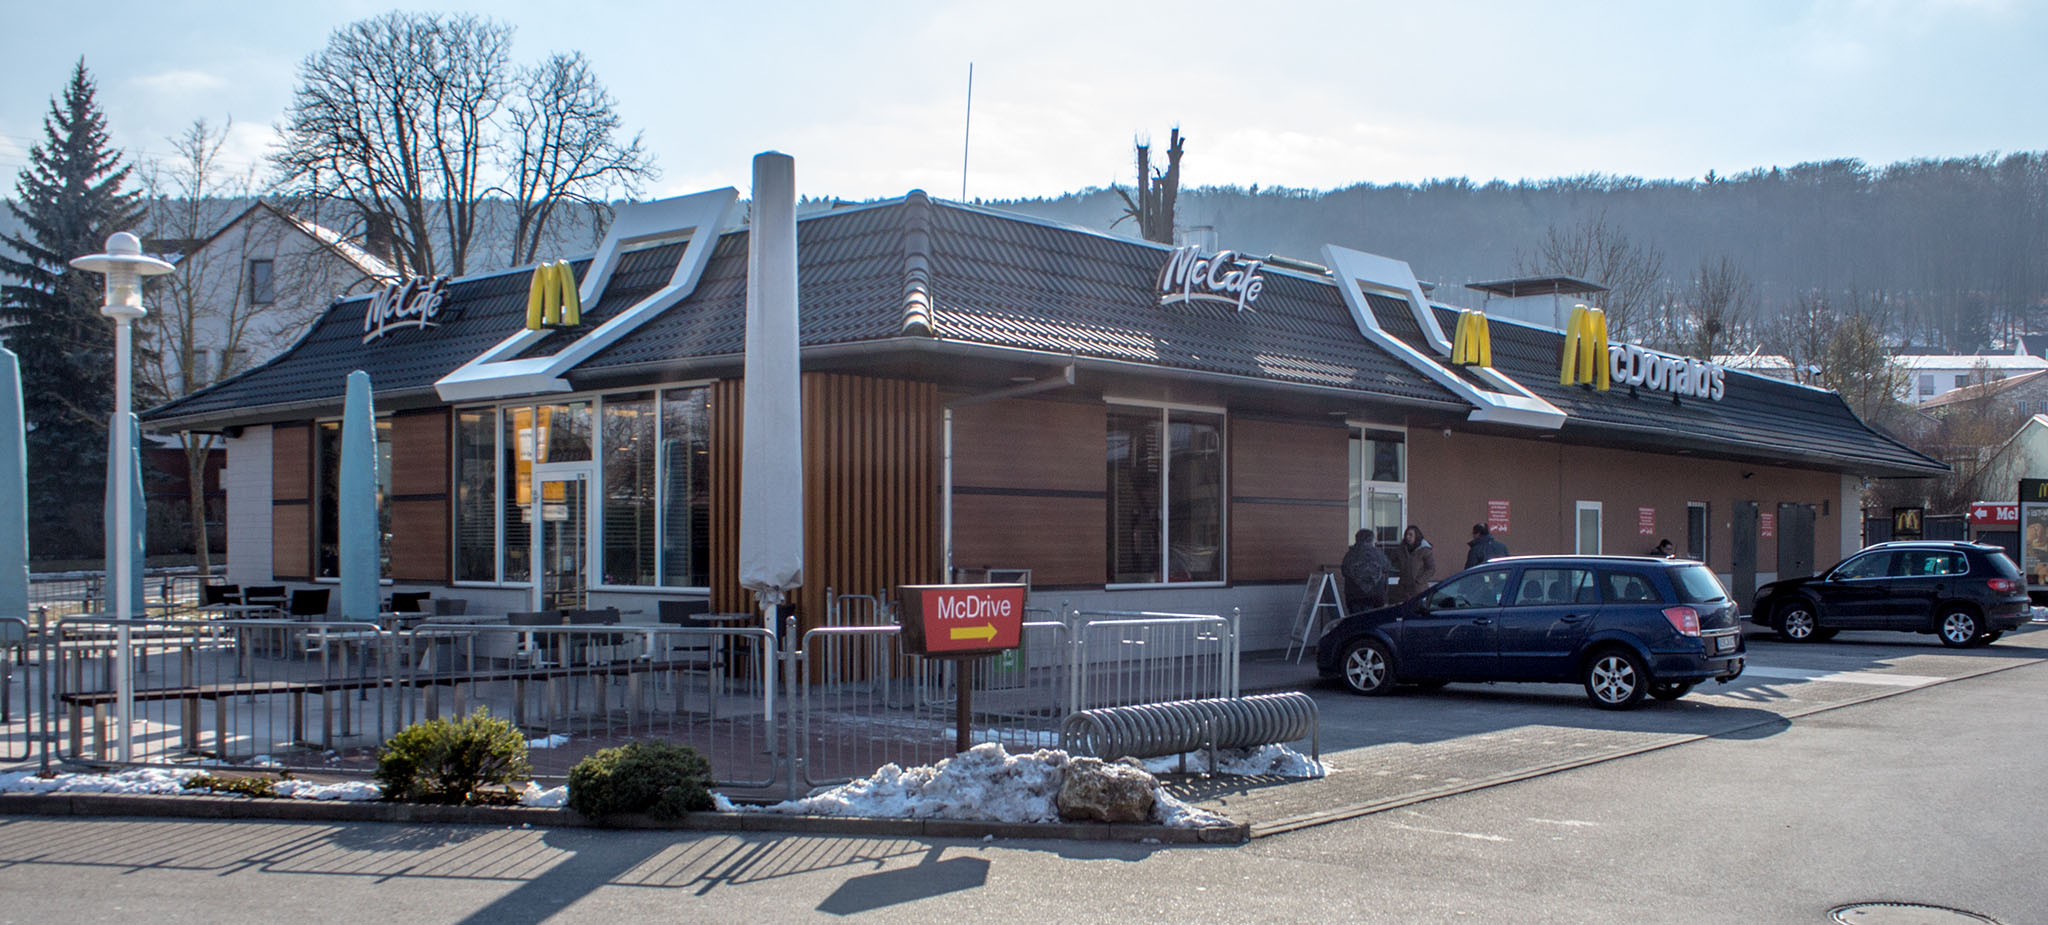 Das McDonald’s-Restaurant in Kelheim